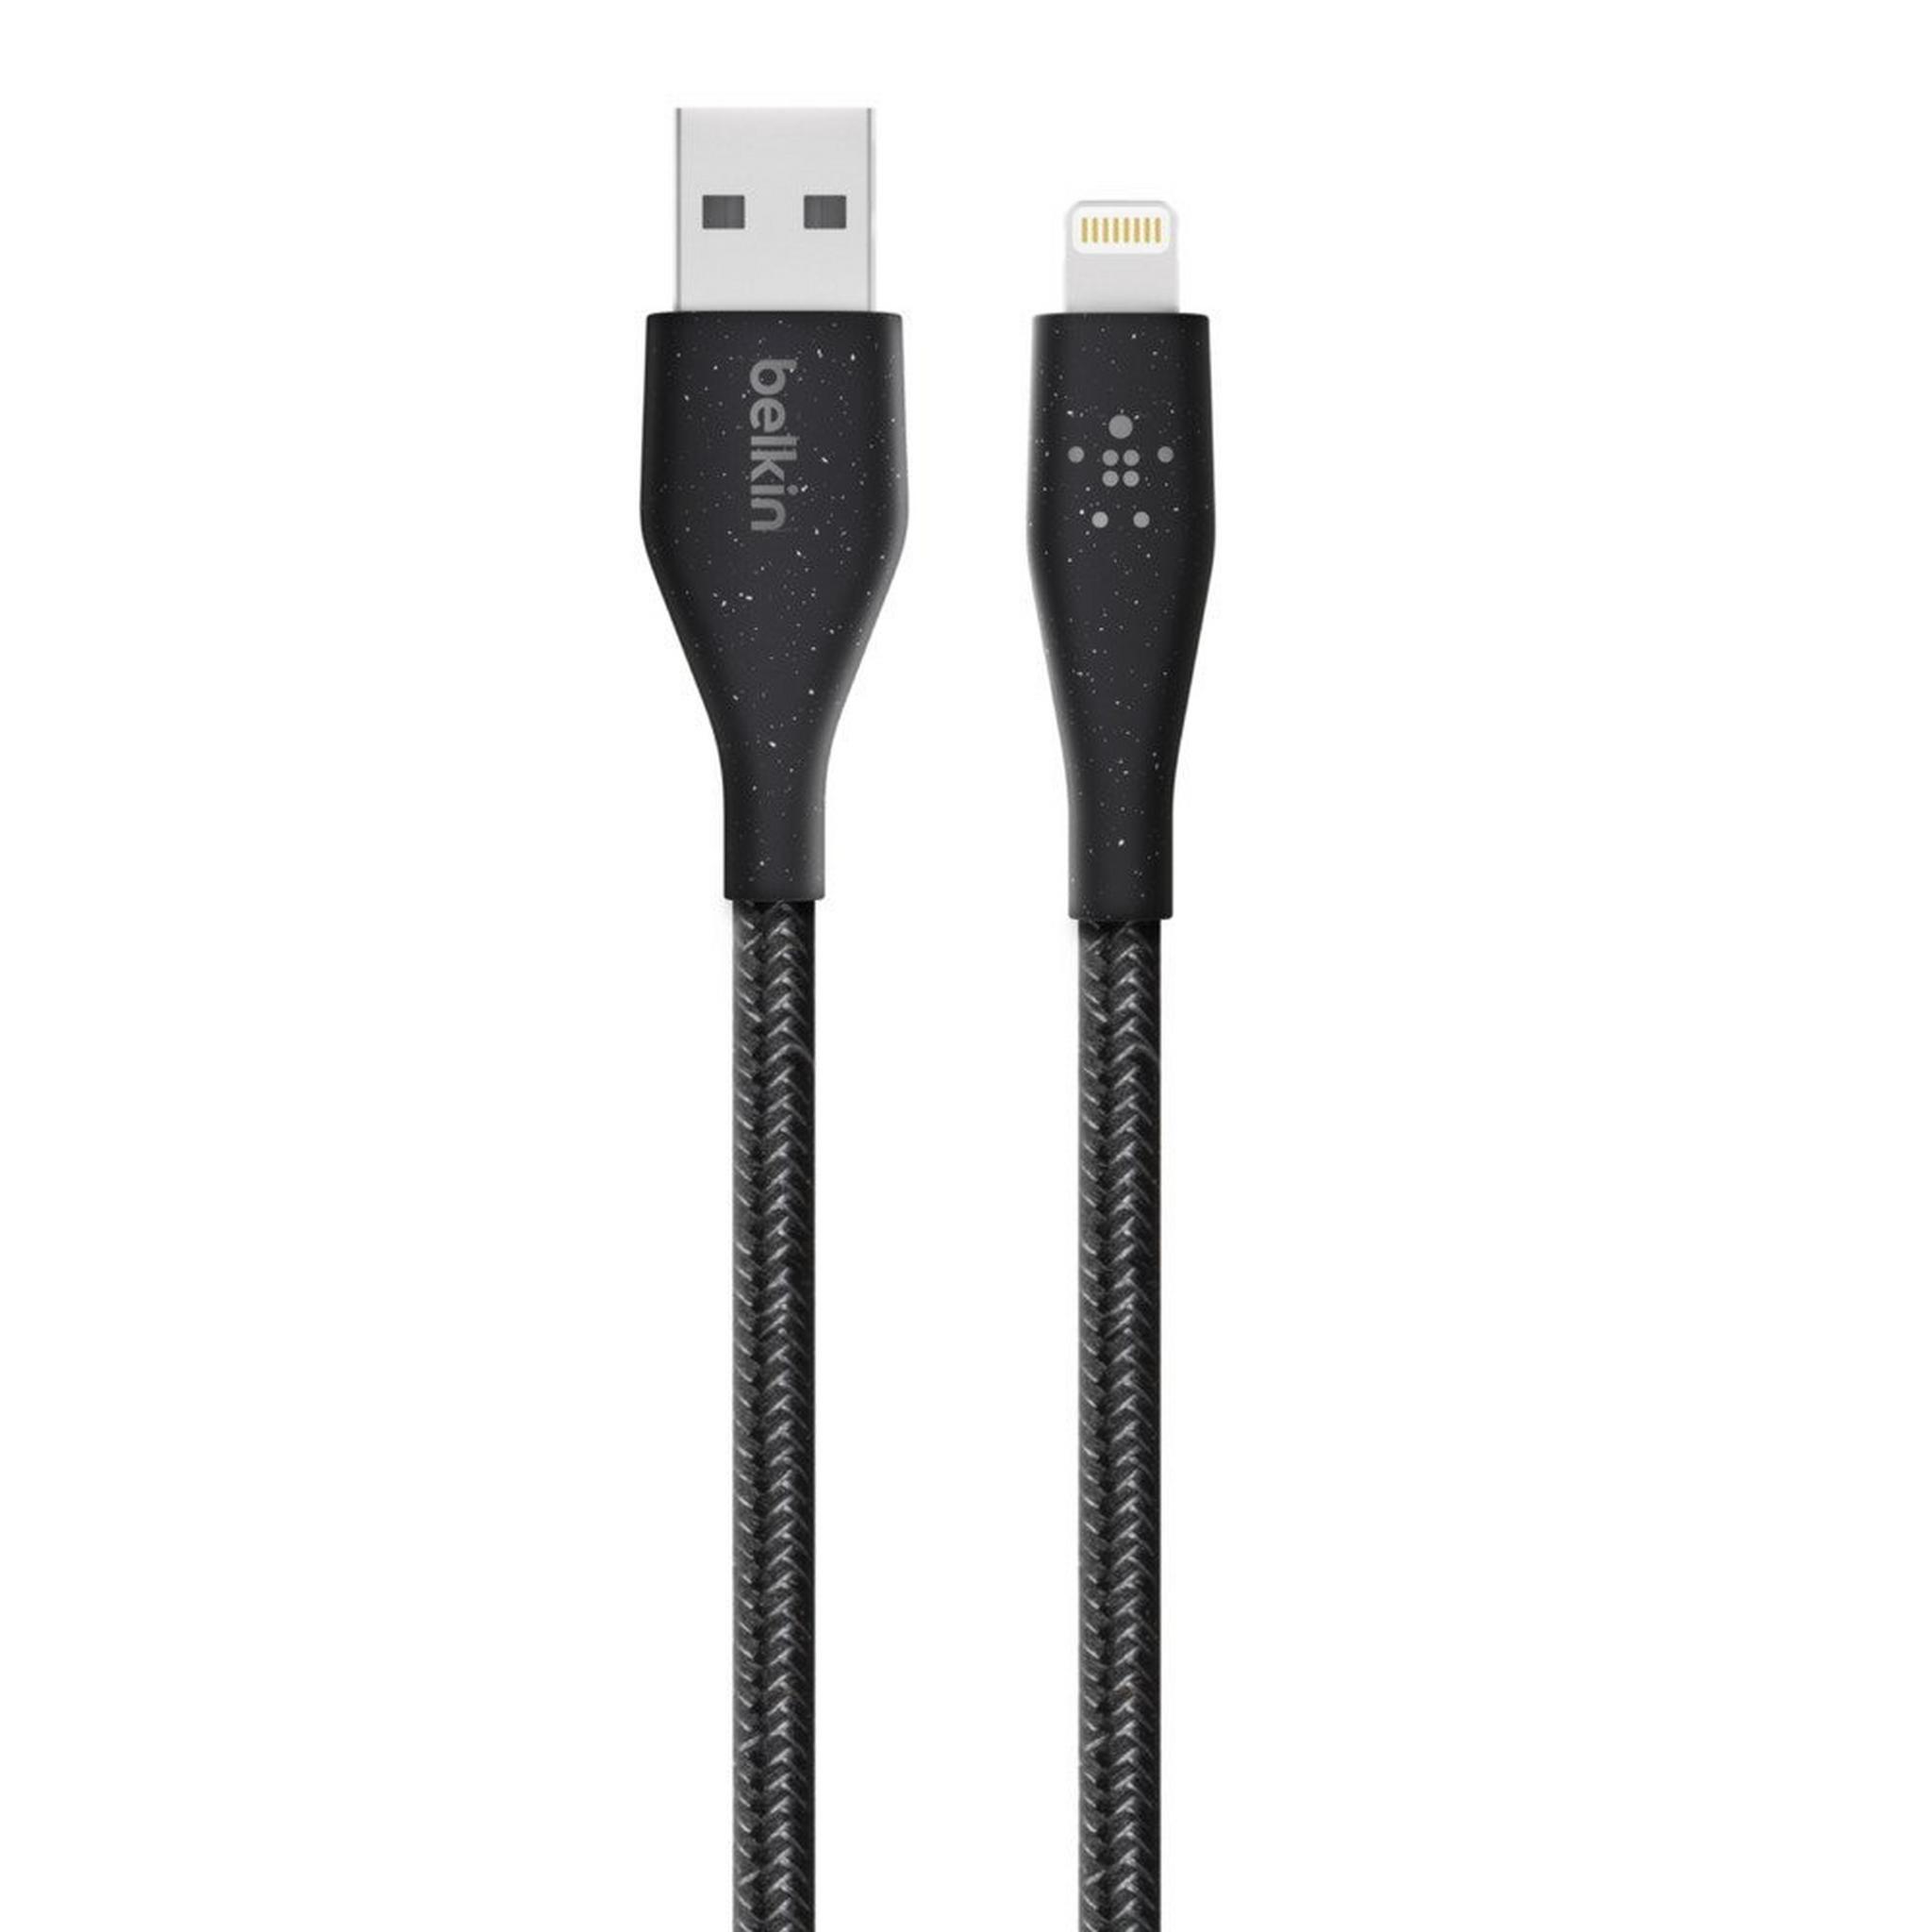 Belkin DuraTek Plus Lightning to USB-A Cable (F8J236bt04) - Black